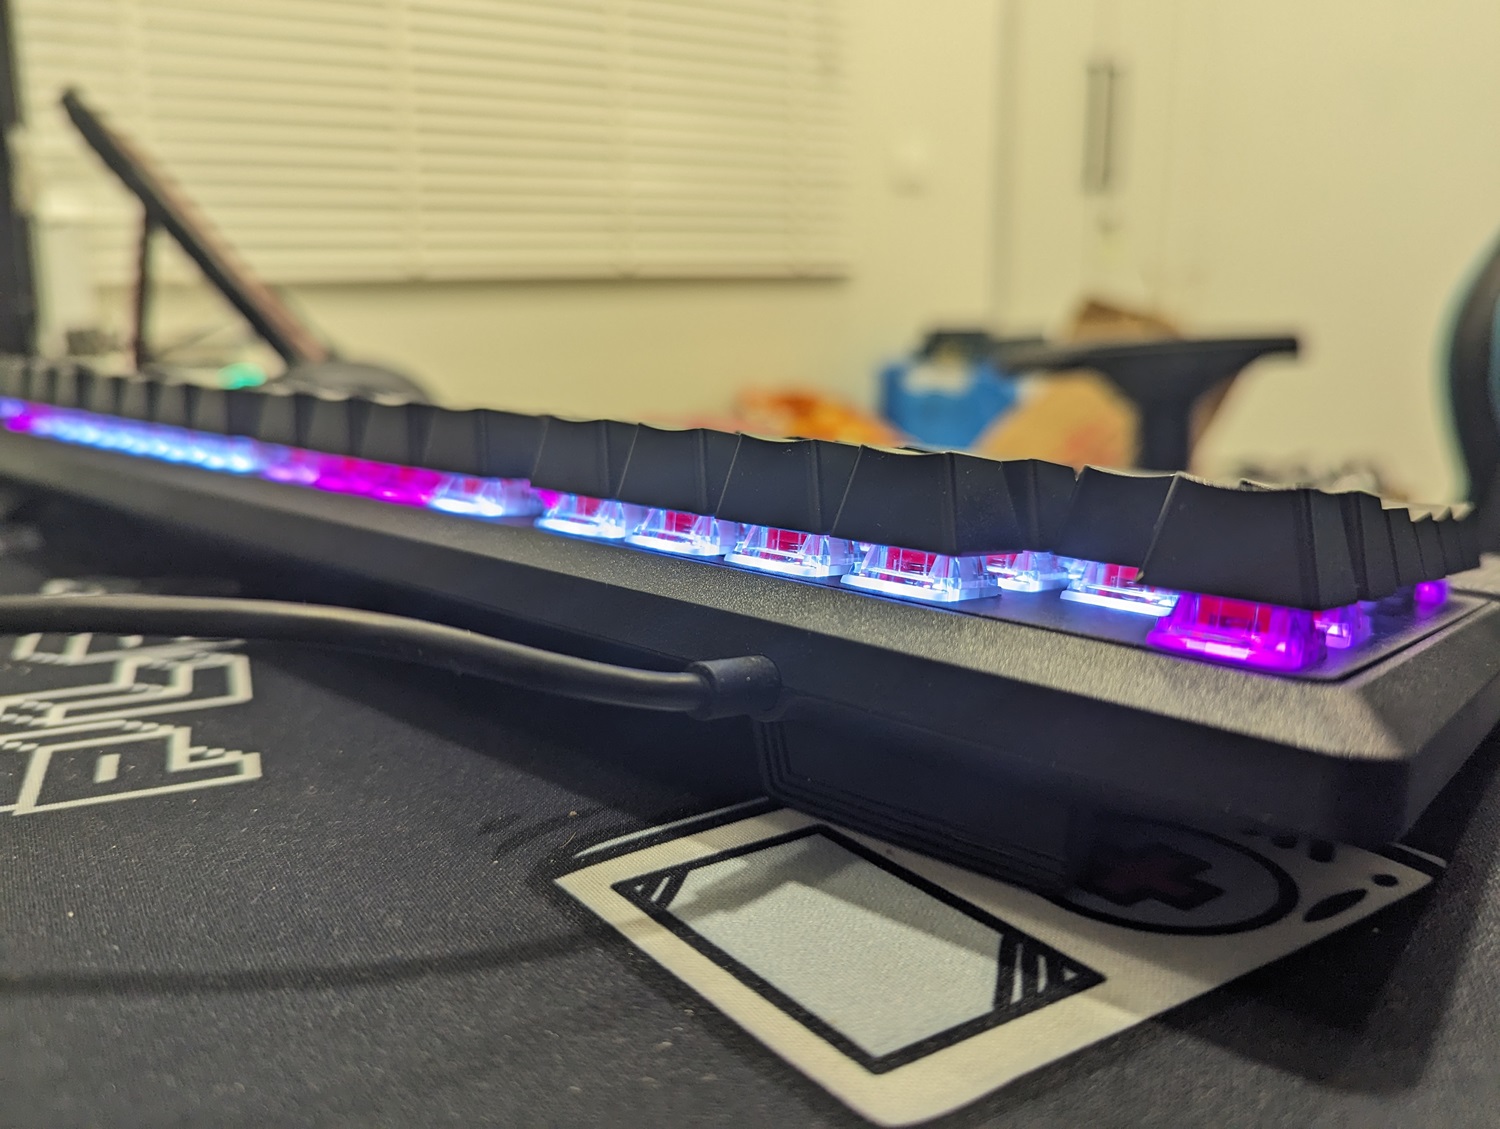 Lighting on the Corsair K70 Core keyboard.